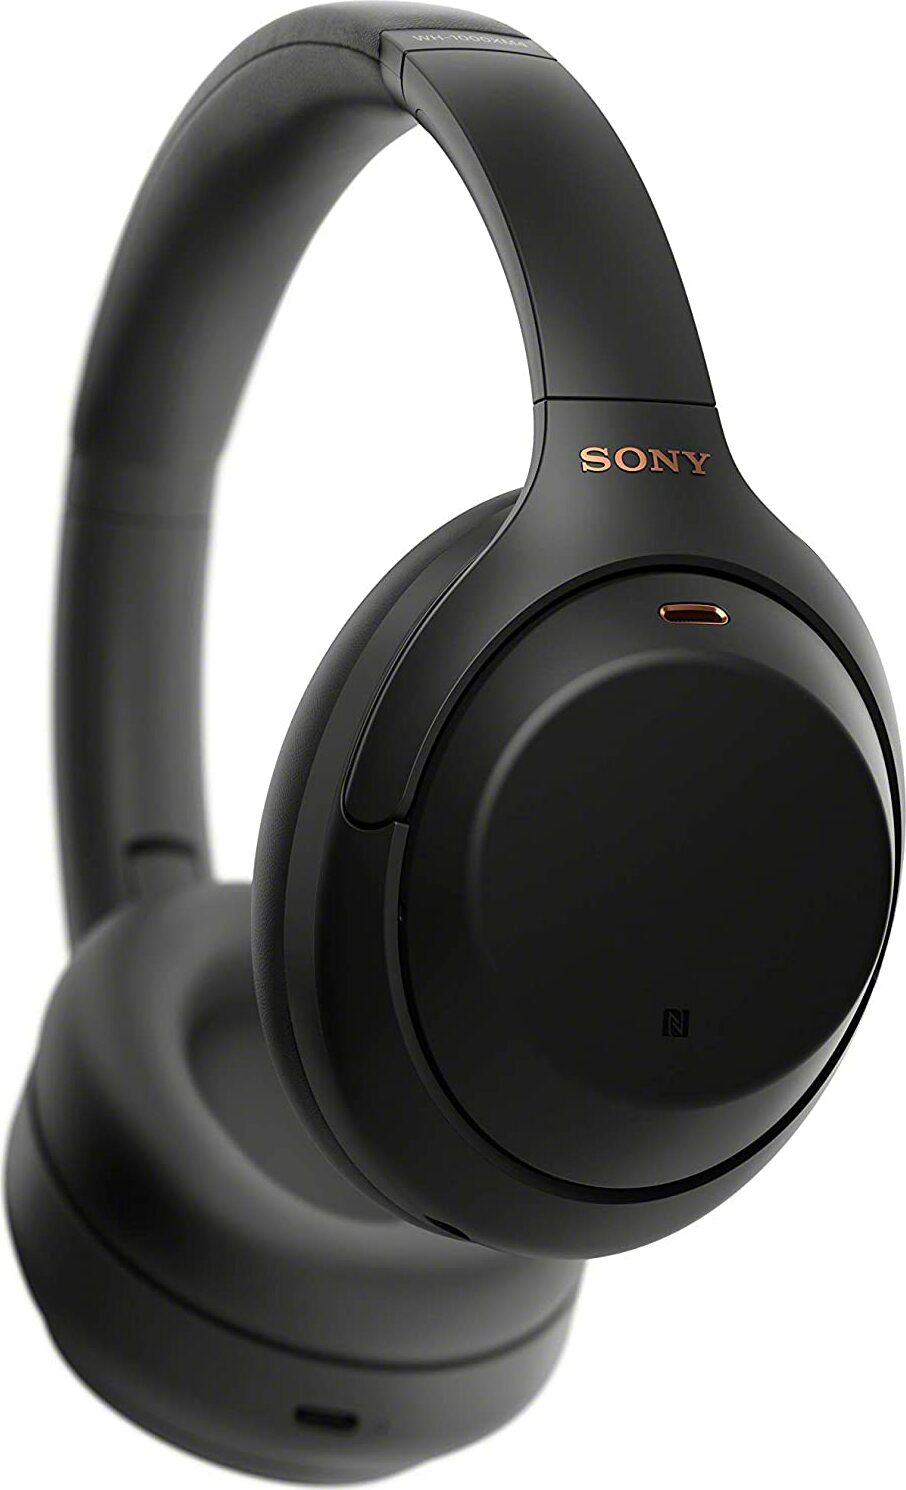 Sony BT slušalice WH1000XM4;blokada buke; baterija do 30h;domet 10m; 40mm pogonski sklop; NFC;